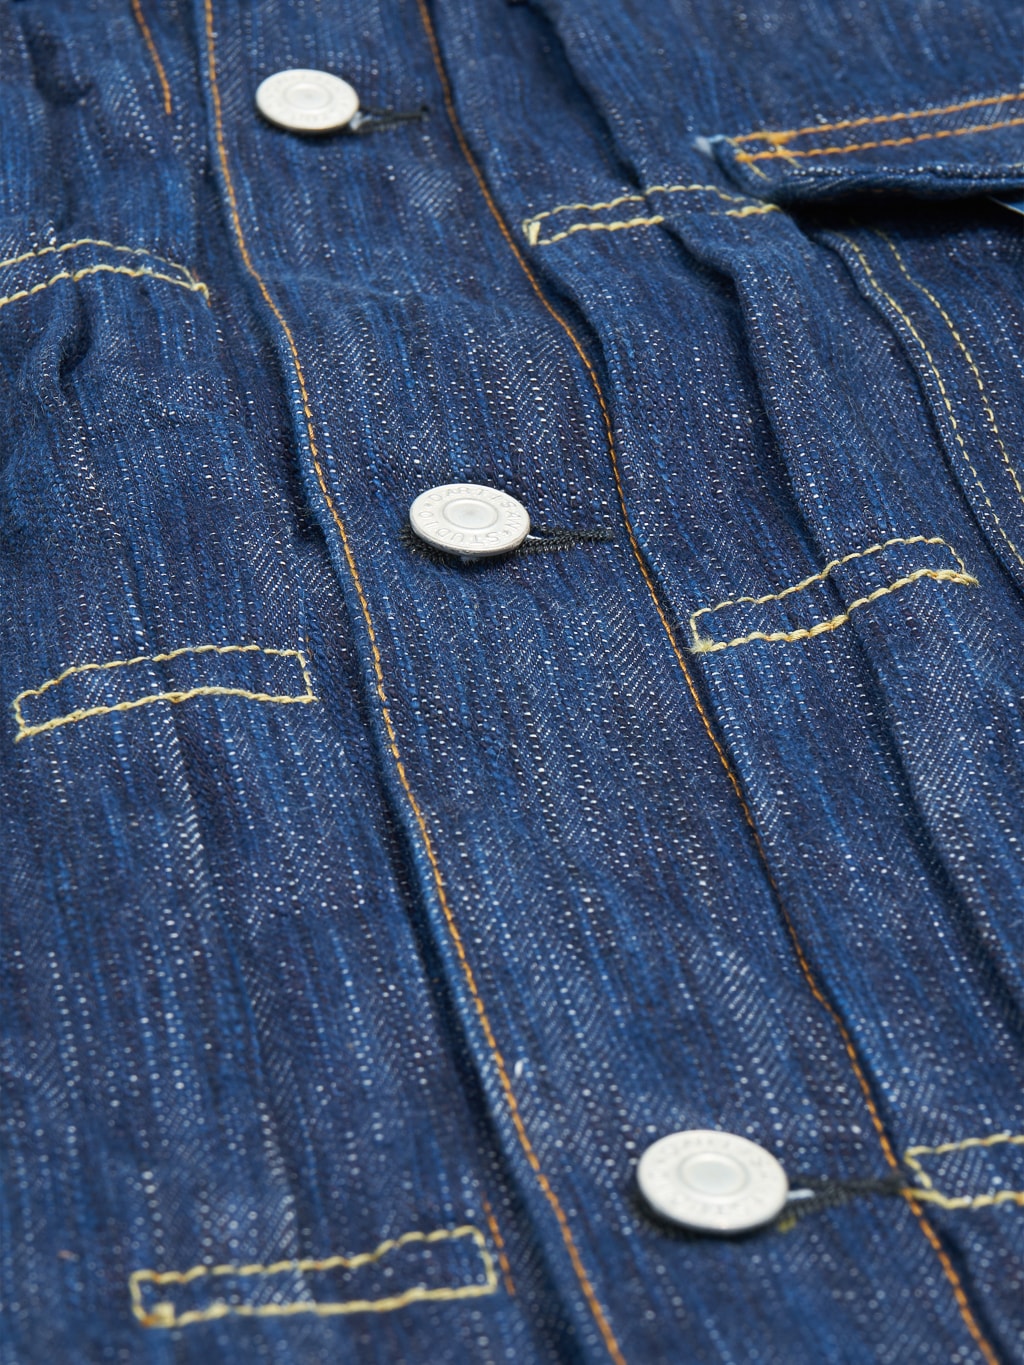 Studio Dartisan Tokushima Awa Shoai Type II indigo jacket buttons detail